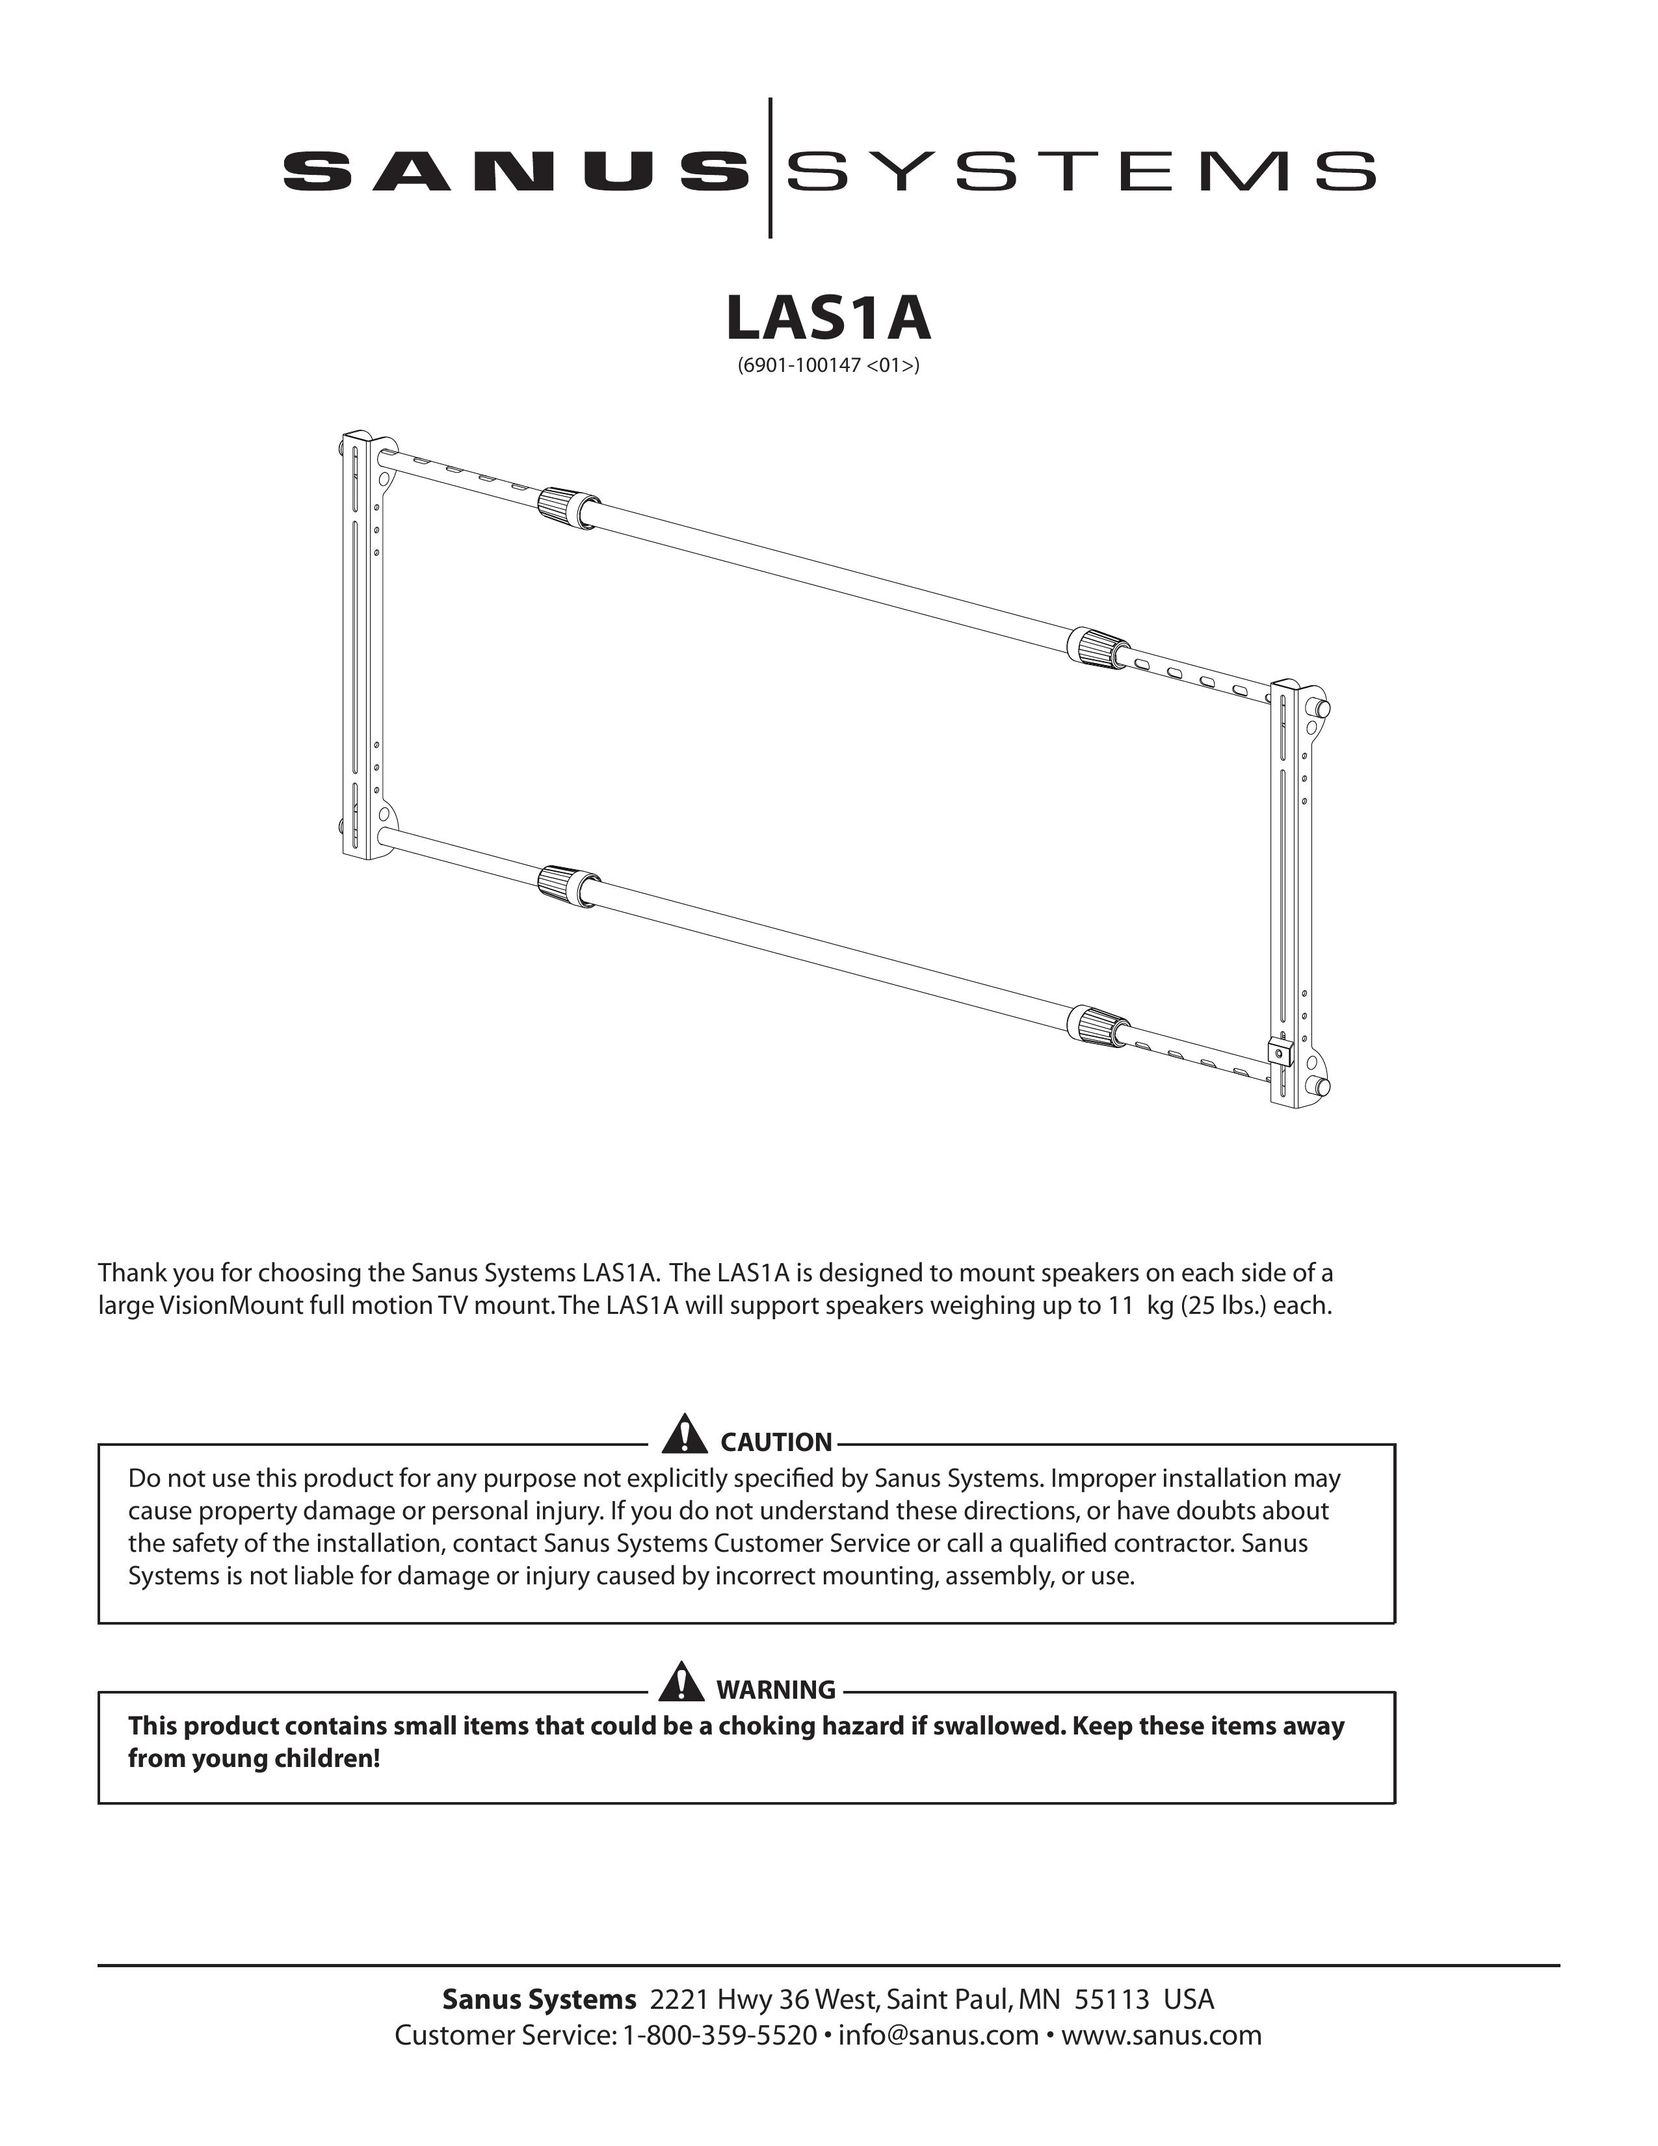 Sanus Systems LAS1A TV Mount User Manual